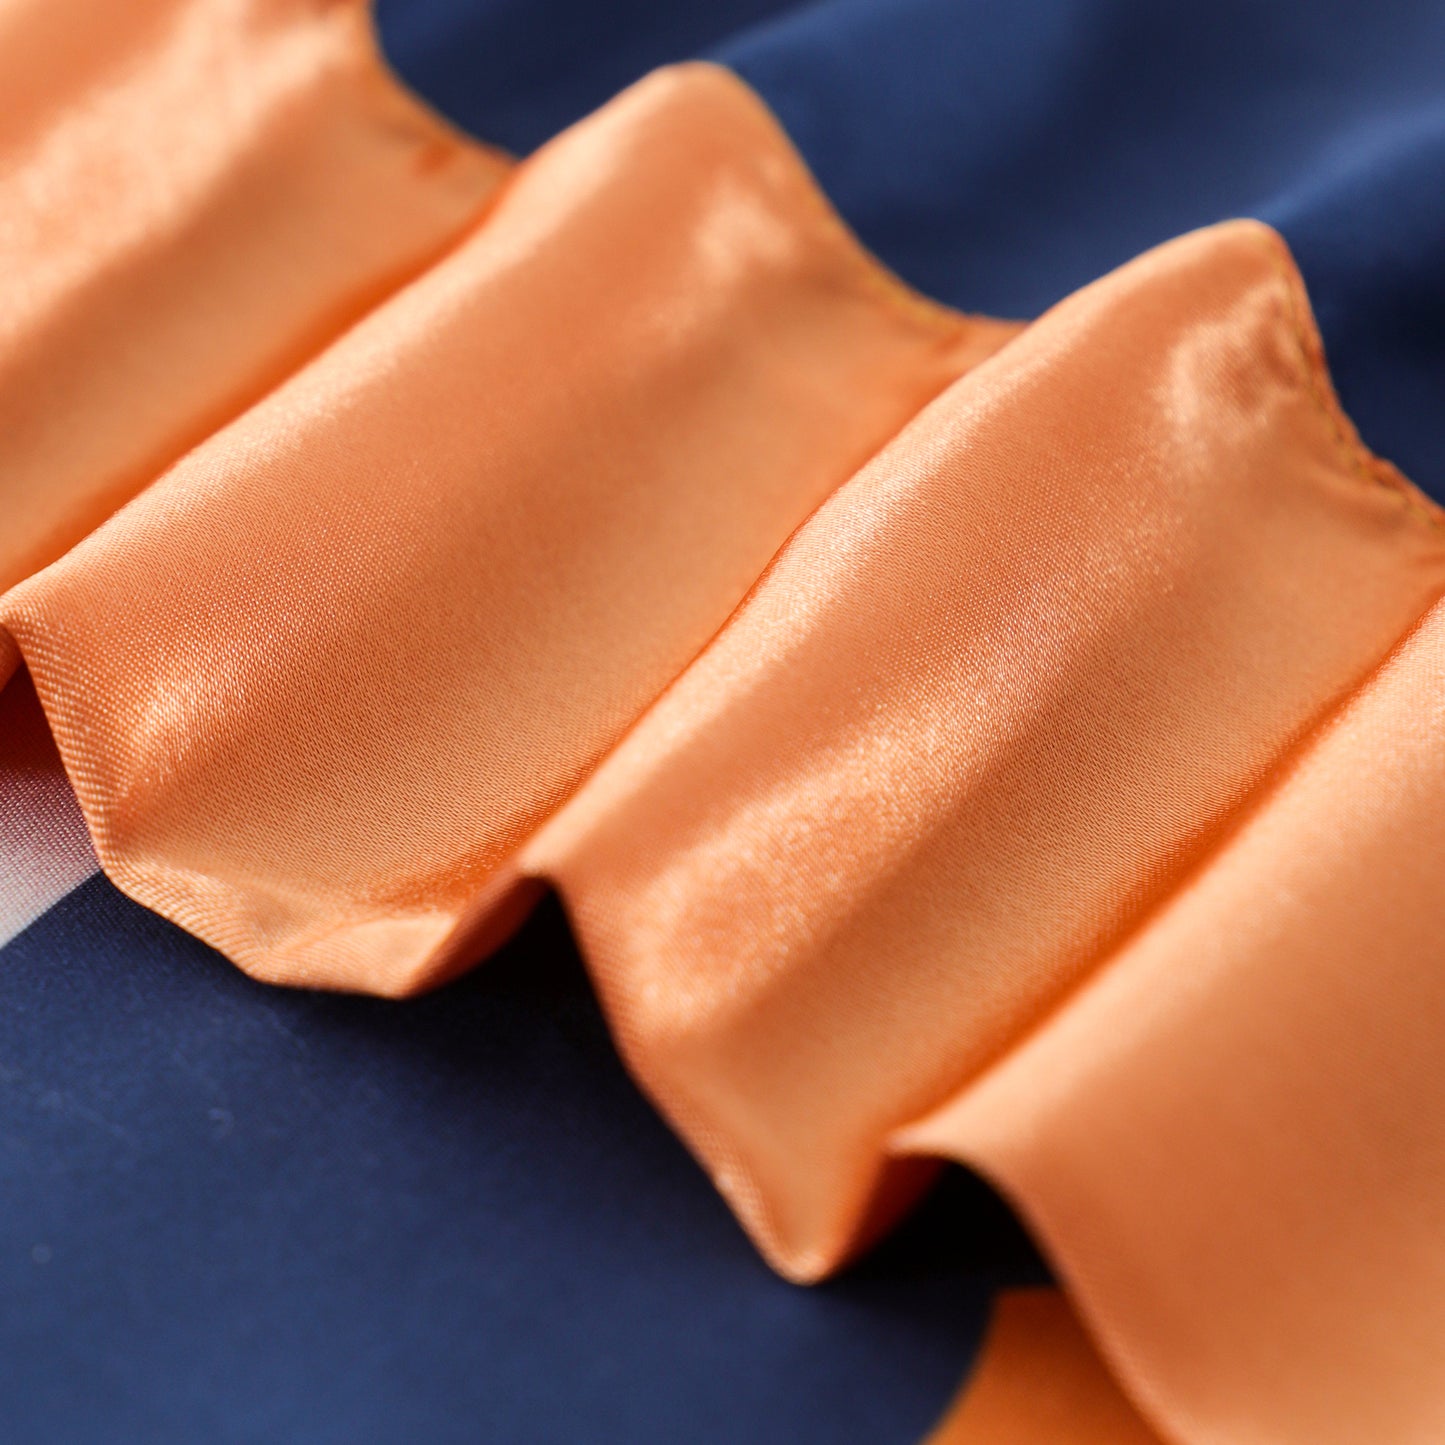 6  Piece Bed Sheet set.-orange and blue